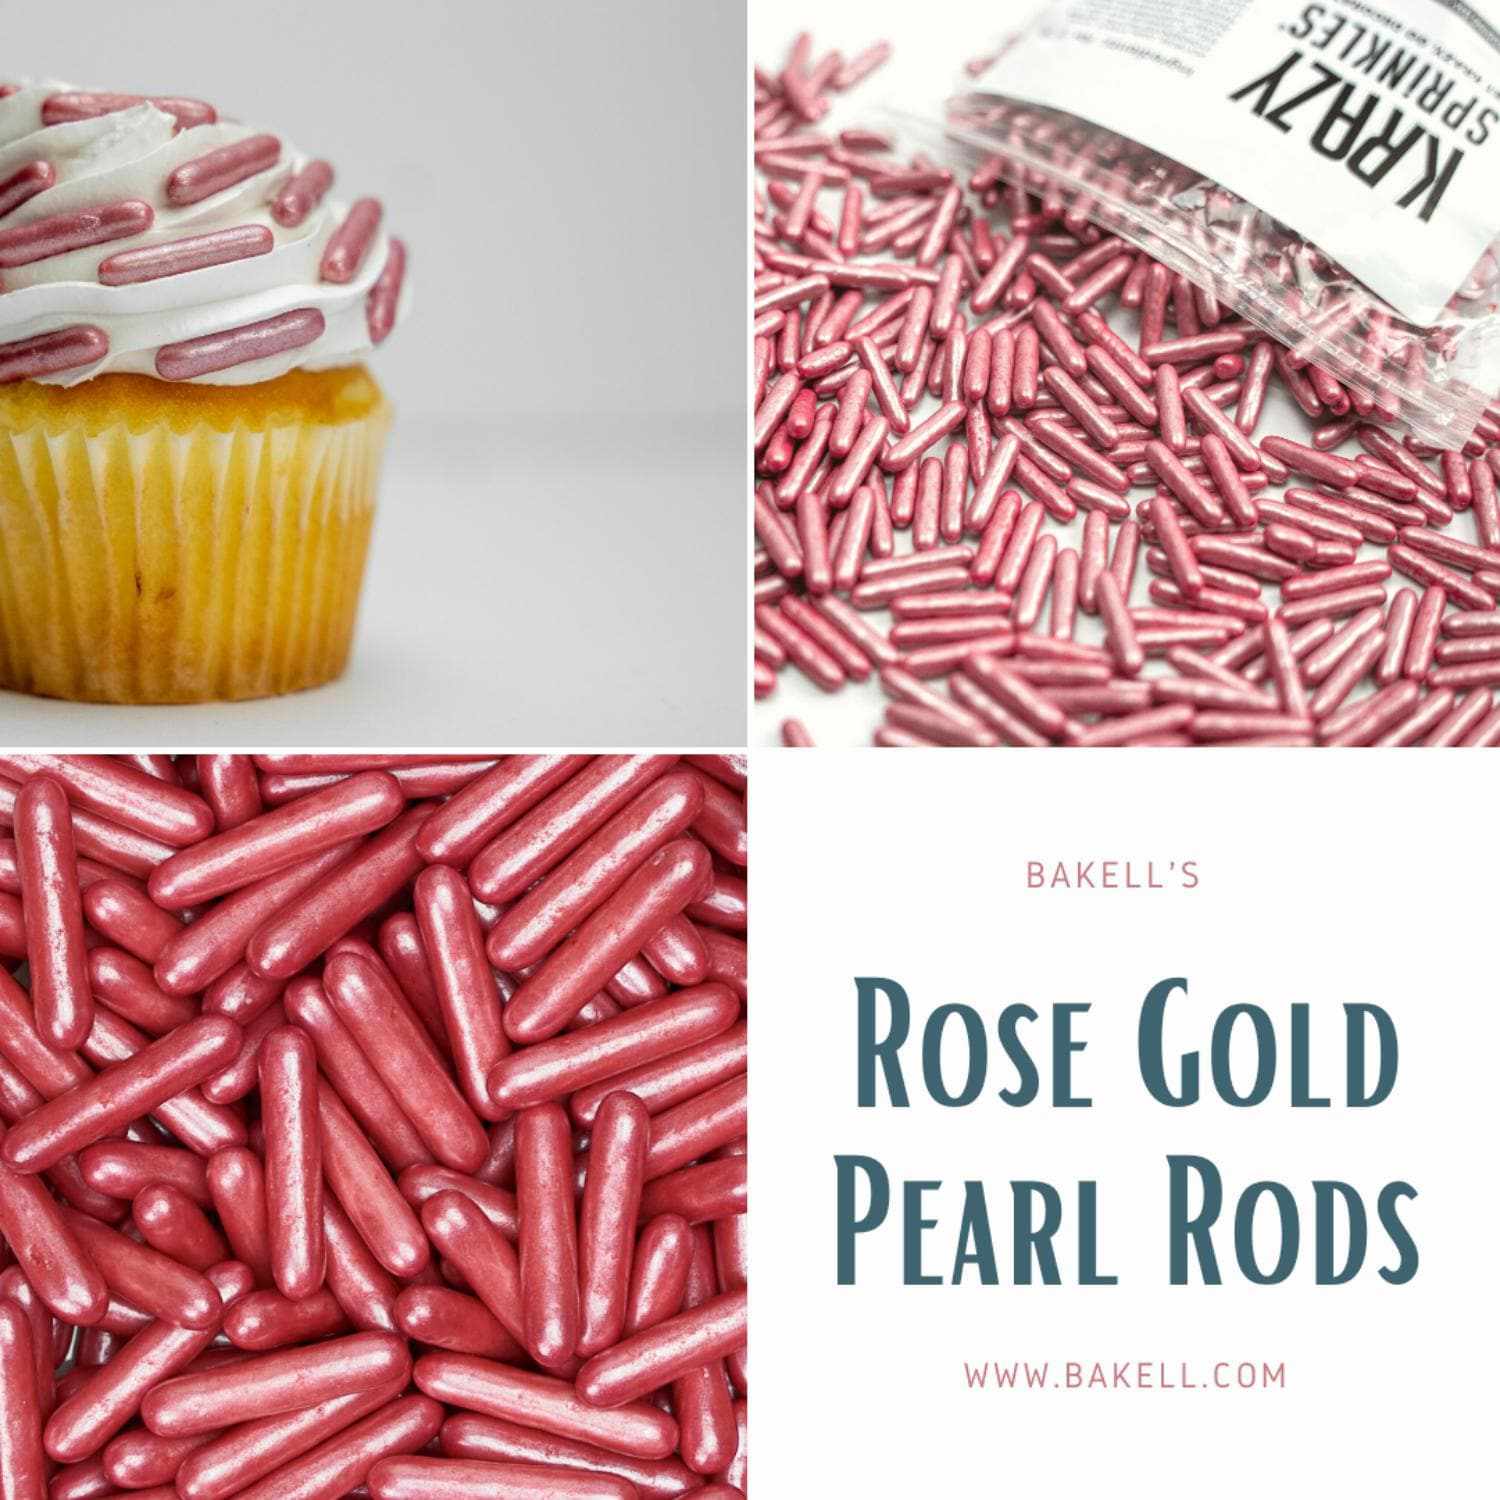 Metallic Rose Gold Rods Edible Sprinkles | Krazy Sprinkles